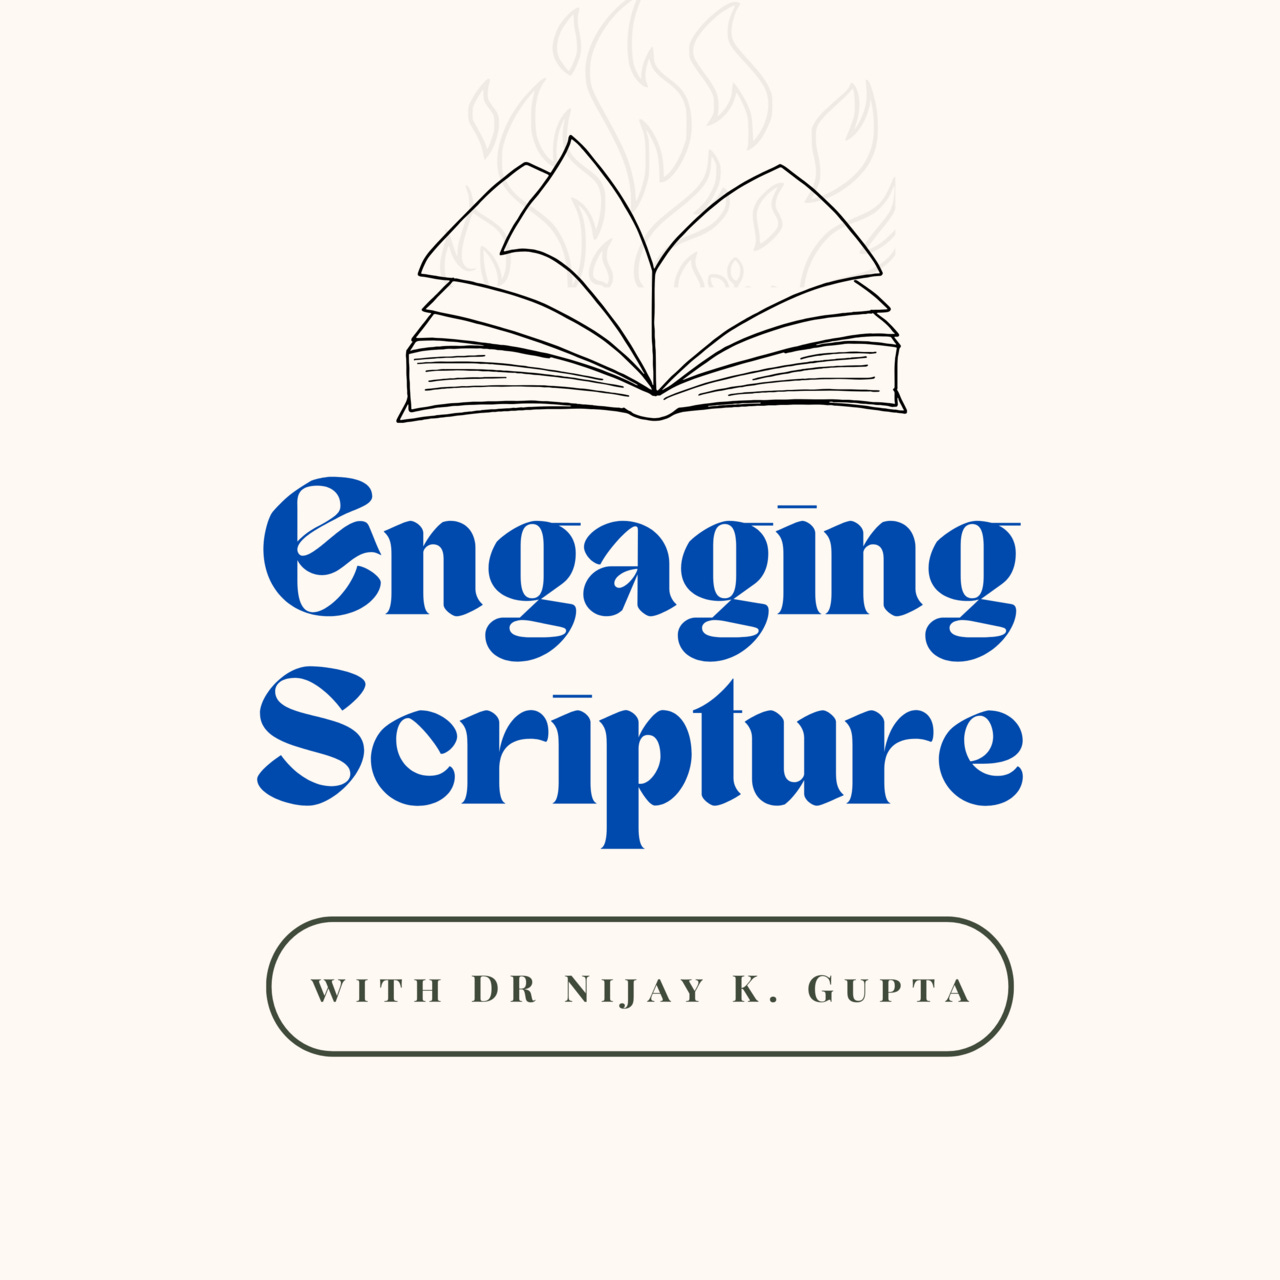 Engaging Scripture (with Dr. Nijay K. Gupta)